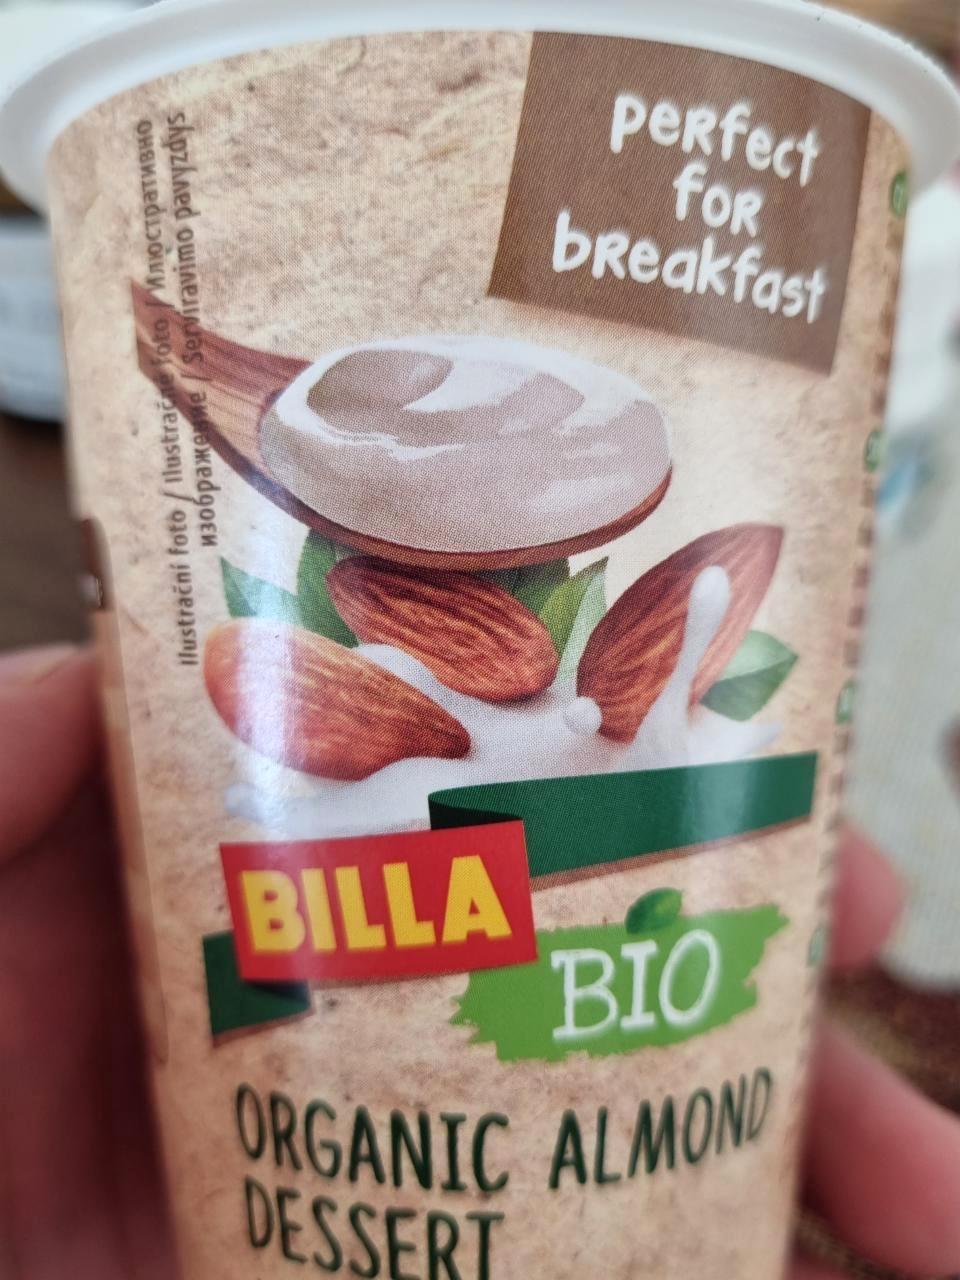 Képek - Organic almond dessert Billa Bio